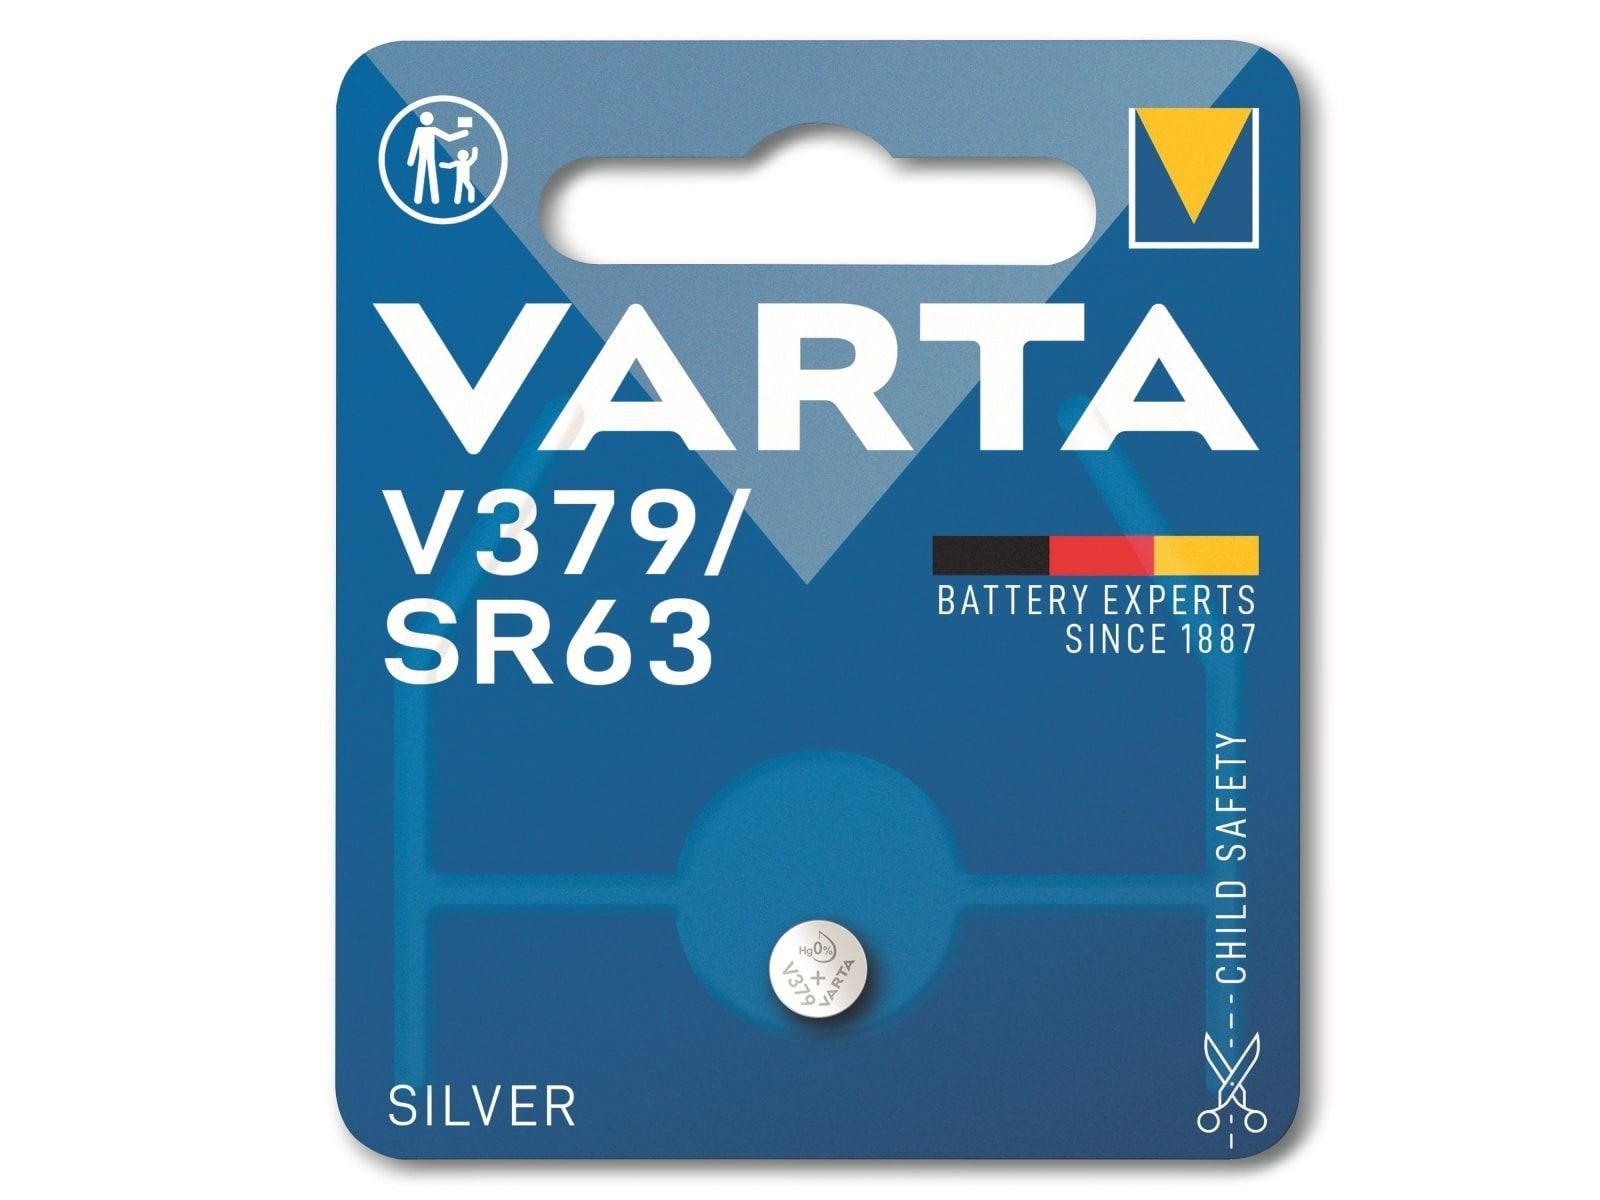 VARTA VARTA Knopfzelle Silver Oxide, 379 SR63, 1.55V, 1 Knopfzelle